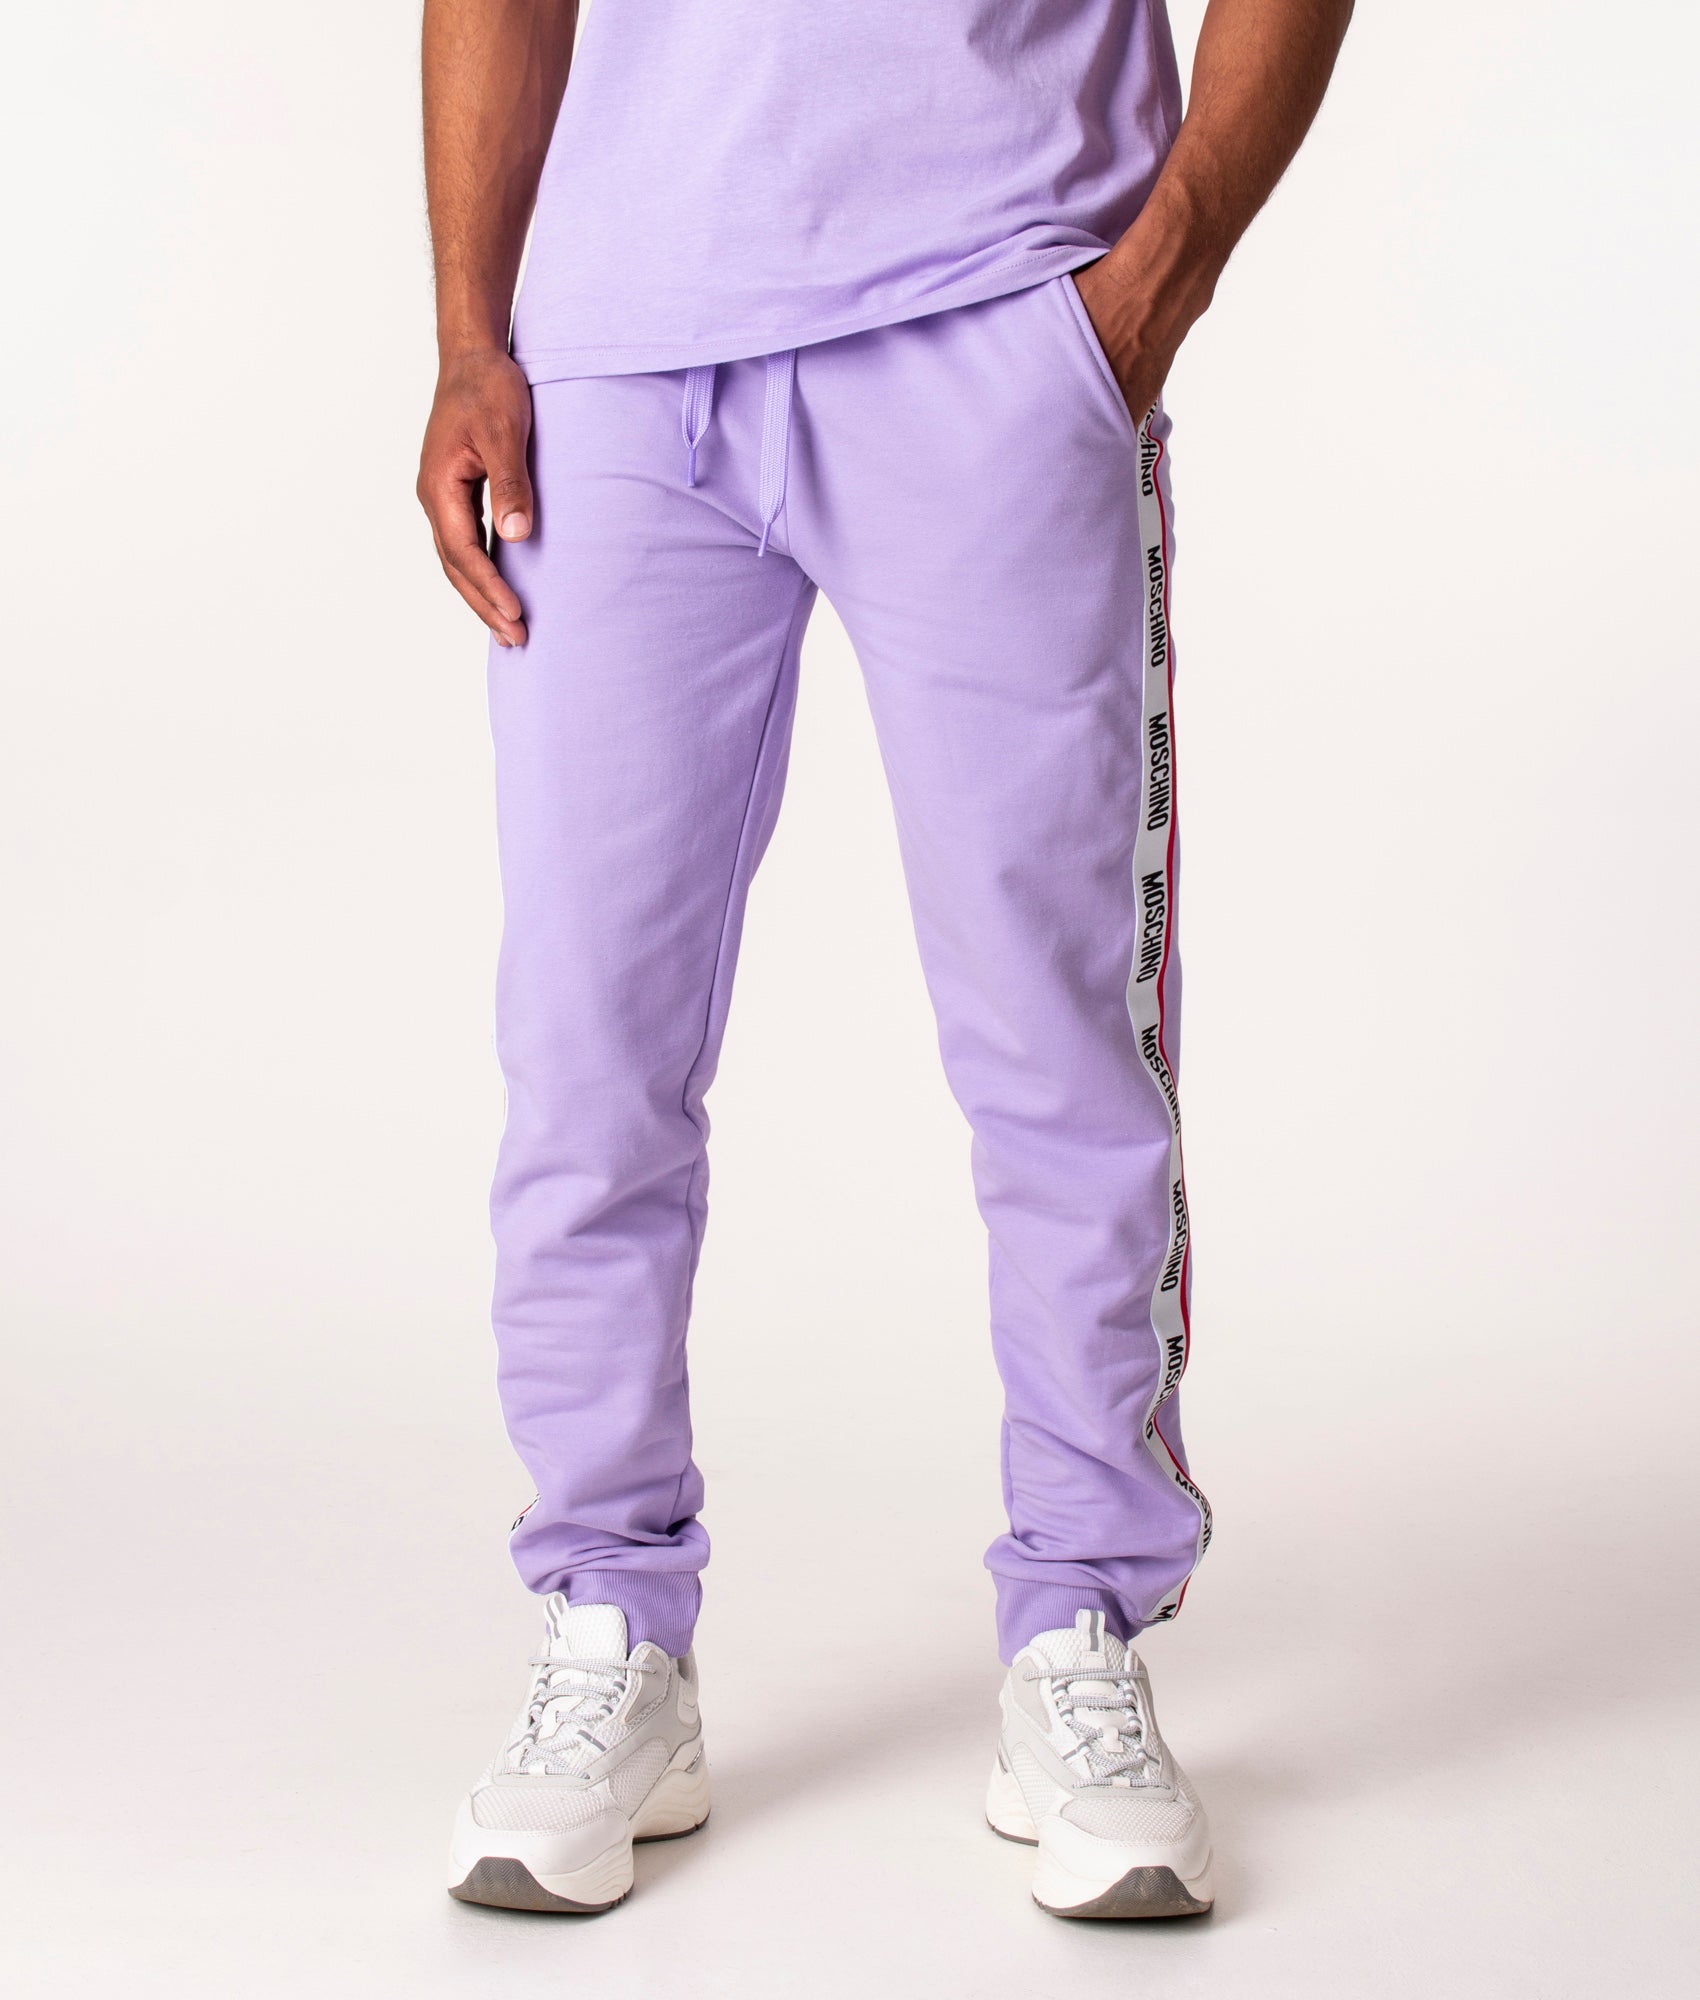 MOSCHINO JEANS TROUSERS - Cargo trousers - violet/purple - Zalando